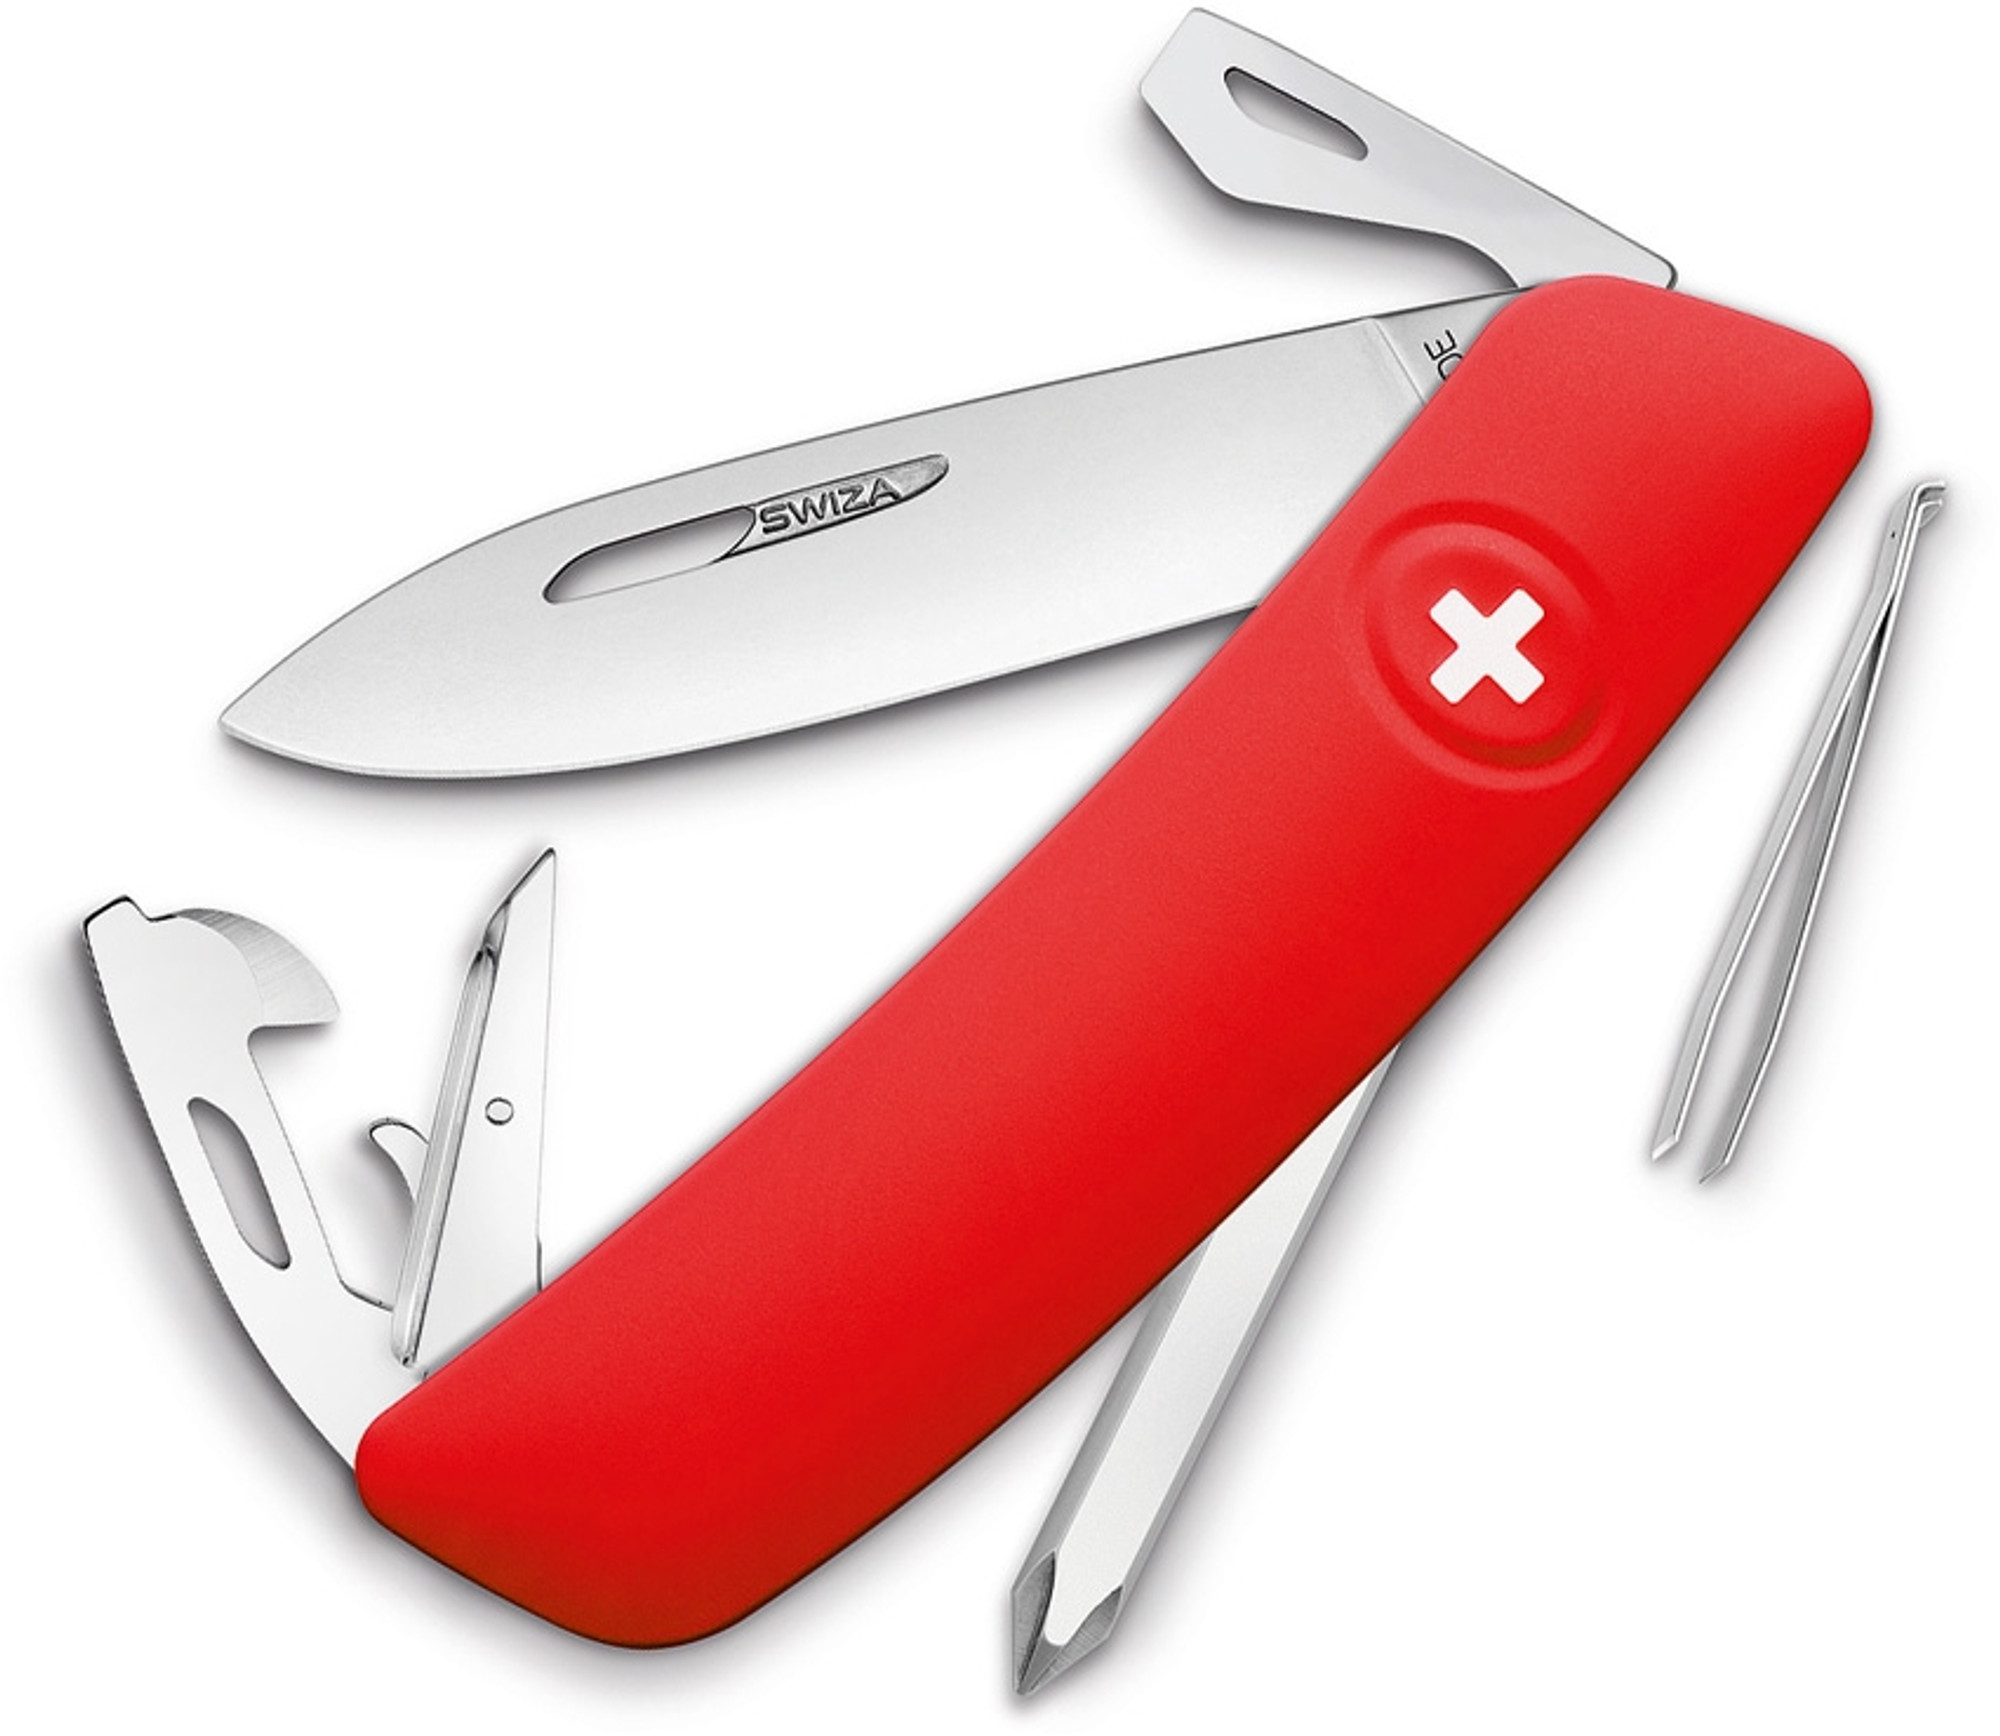 D04 Swiss Pocket Knife Red